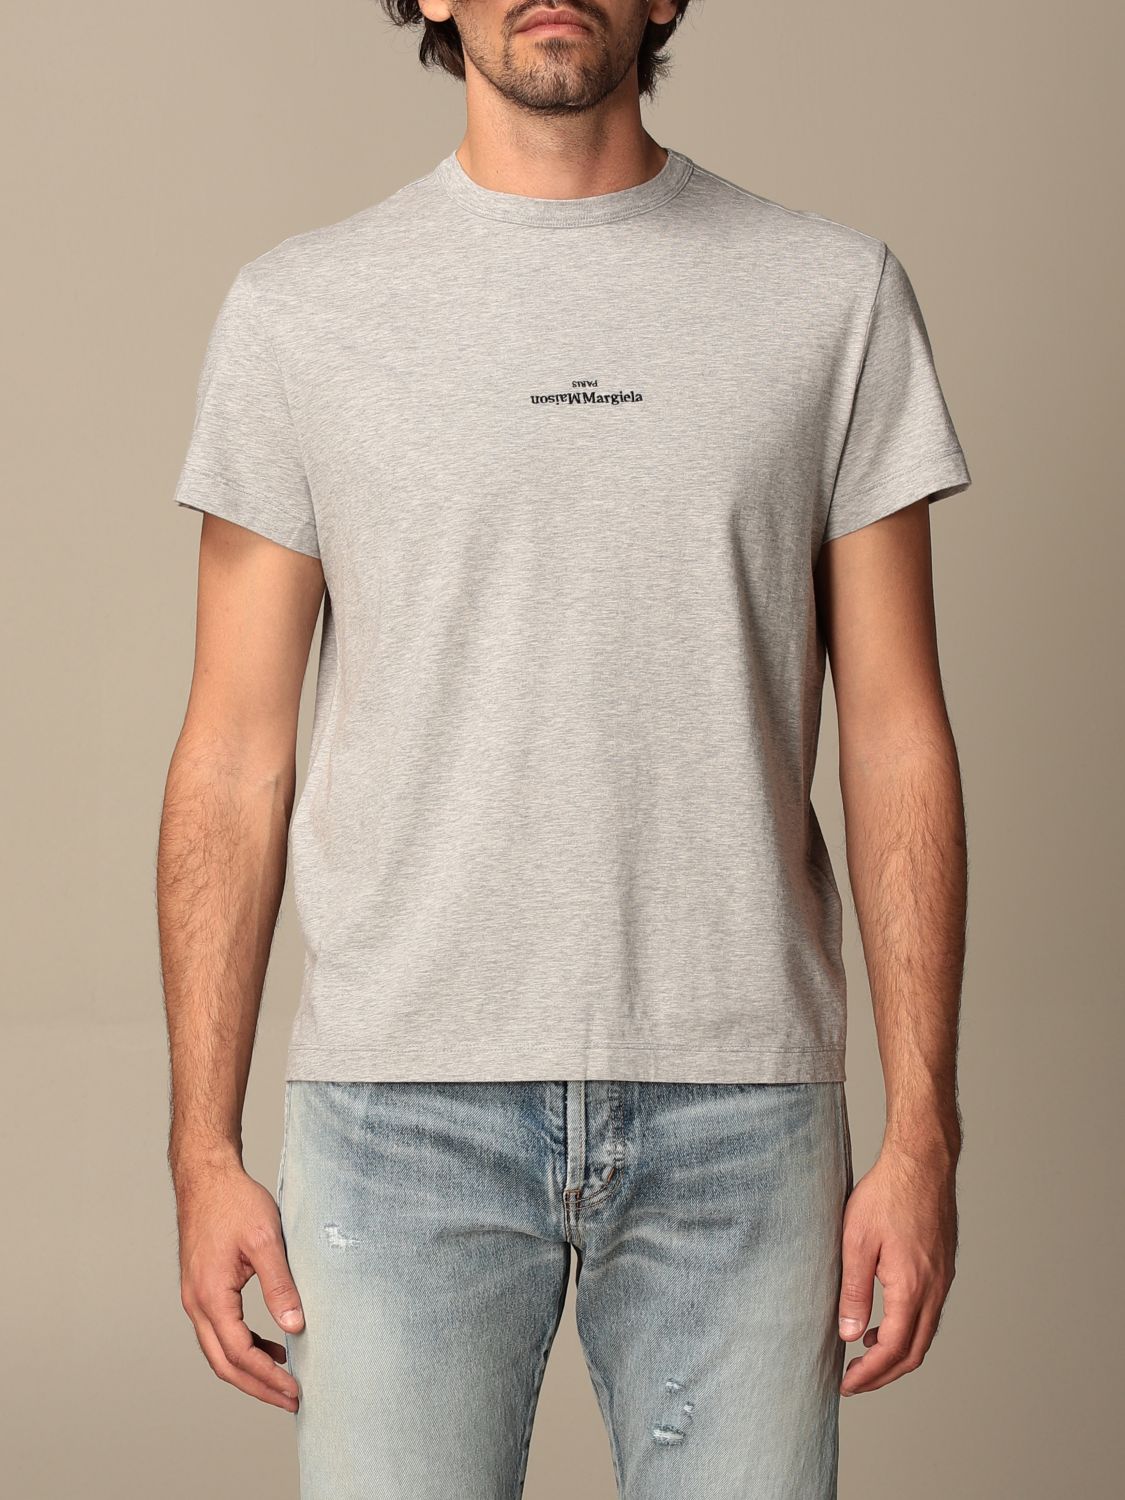 MAISON MARGIELA: cotton T-shirt - Grey | Maison Margiela t-shirt